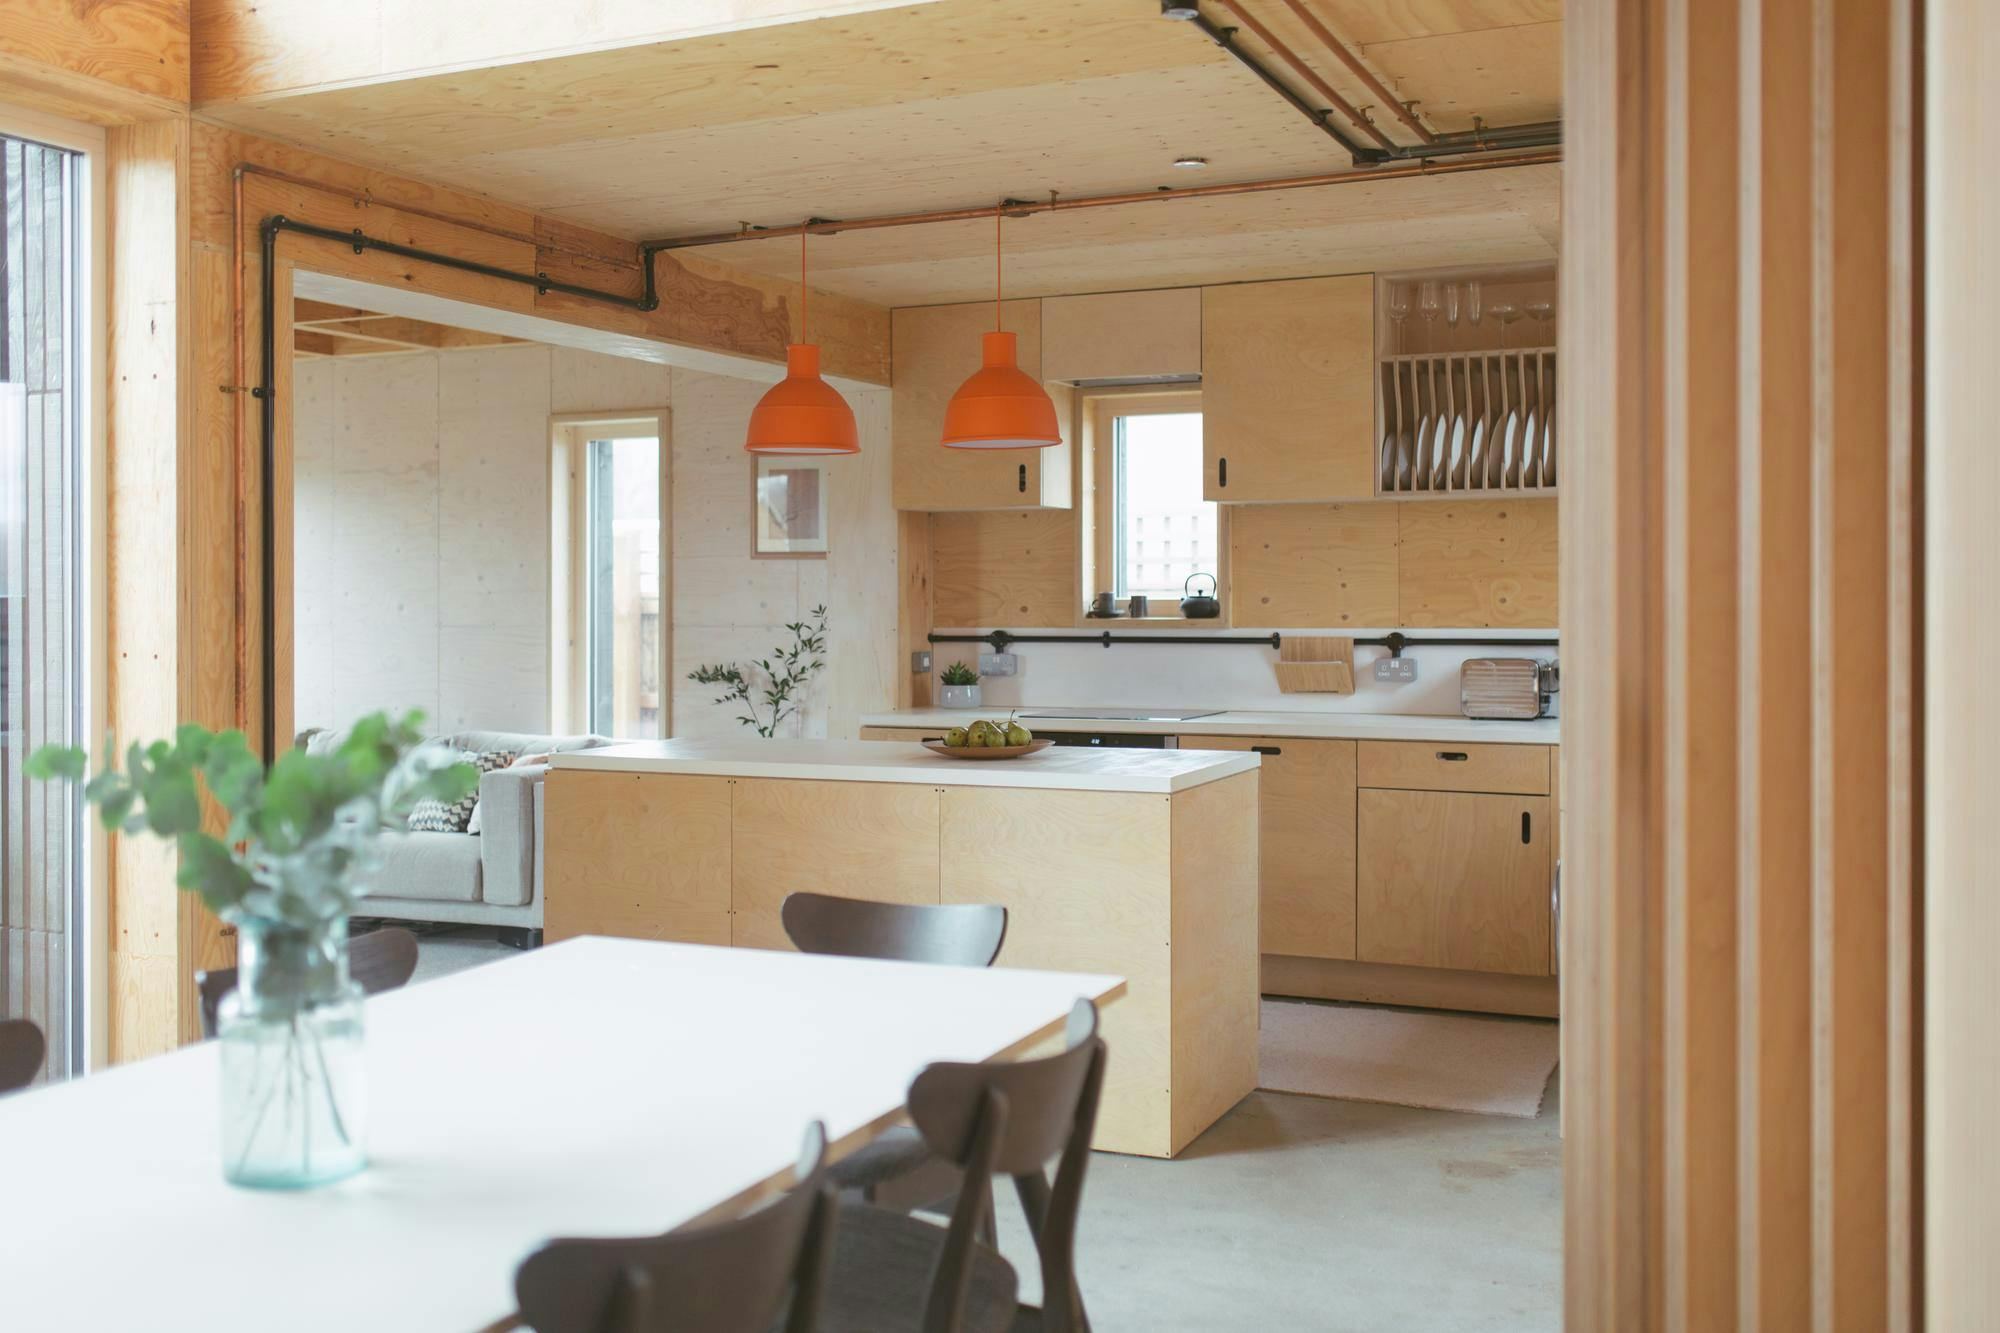 Interior kitchen built using U-Build modular construction